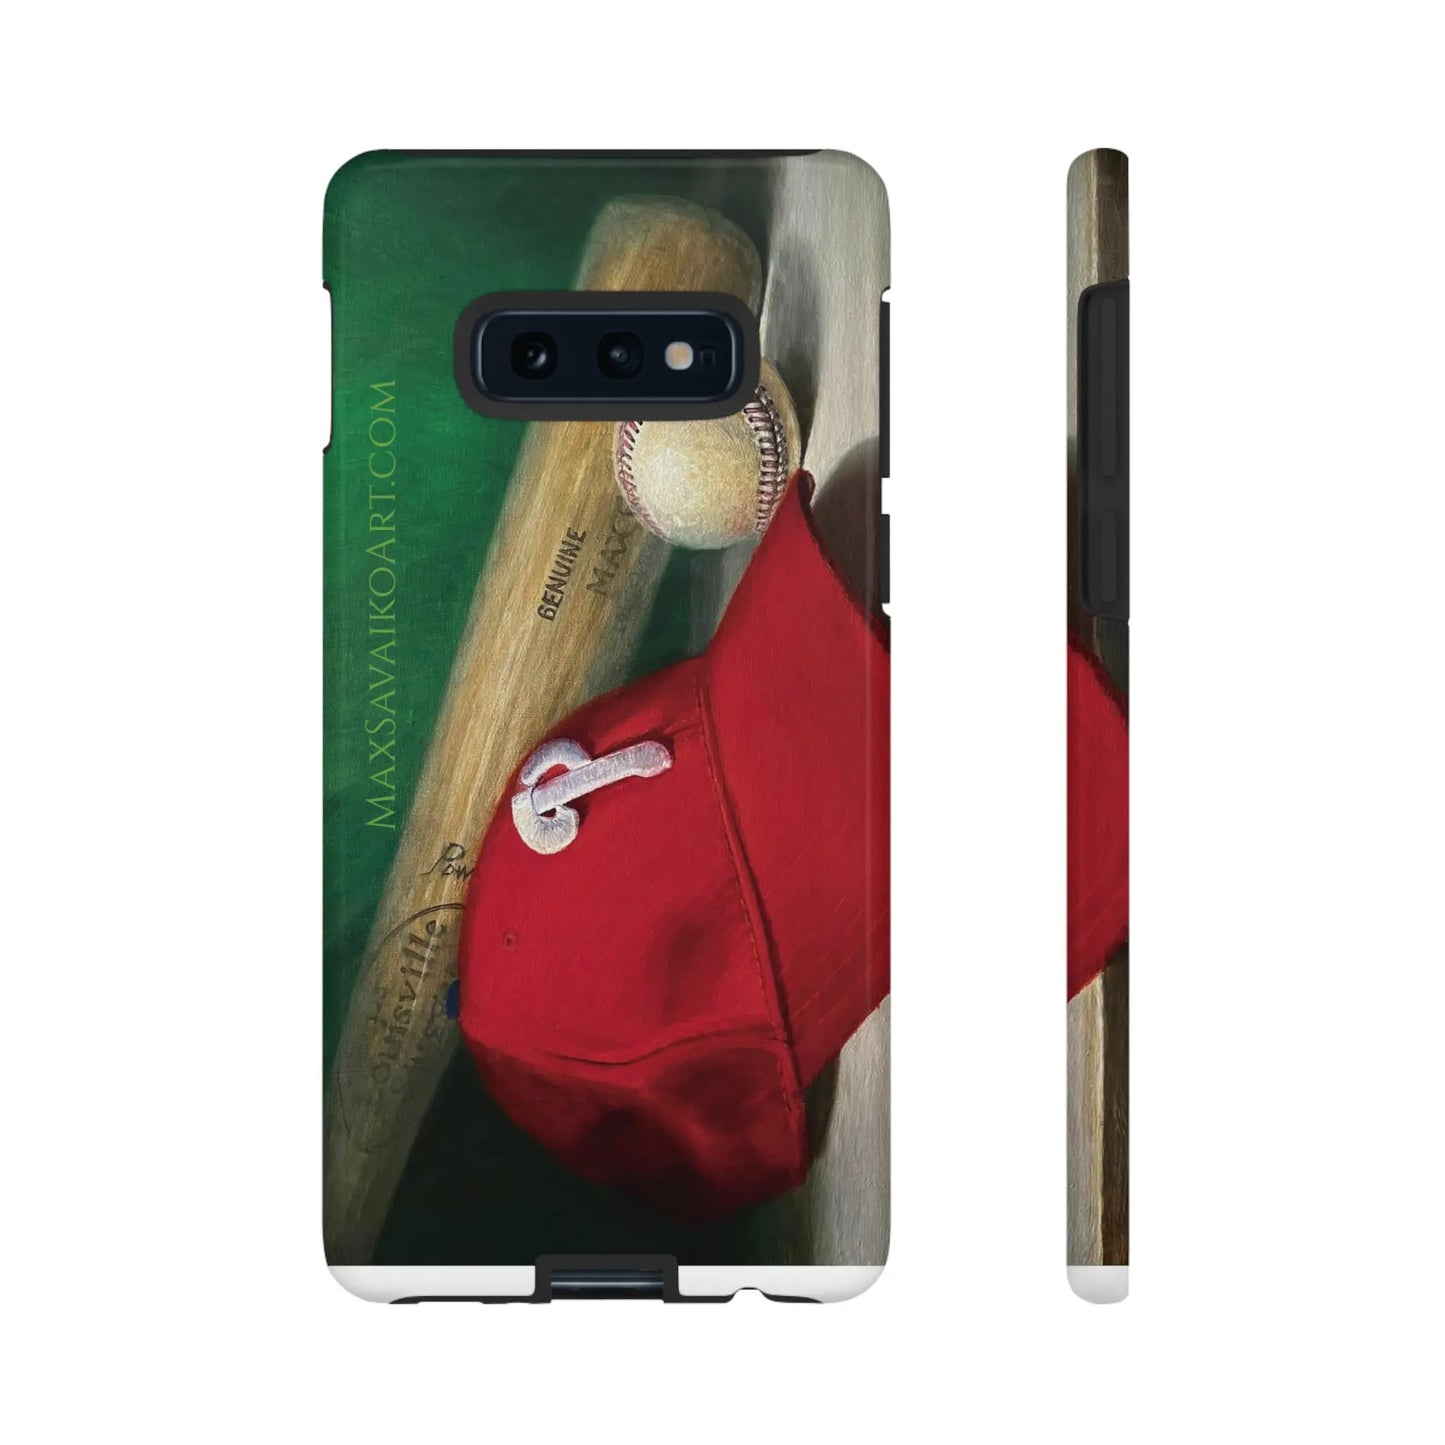 Savaiko Art - Play Ball Philadelphia Phillies iphone case - Max Savaiko Art